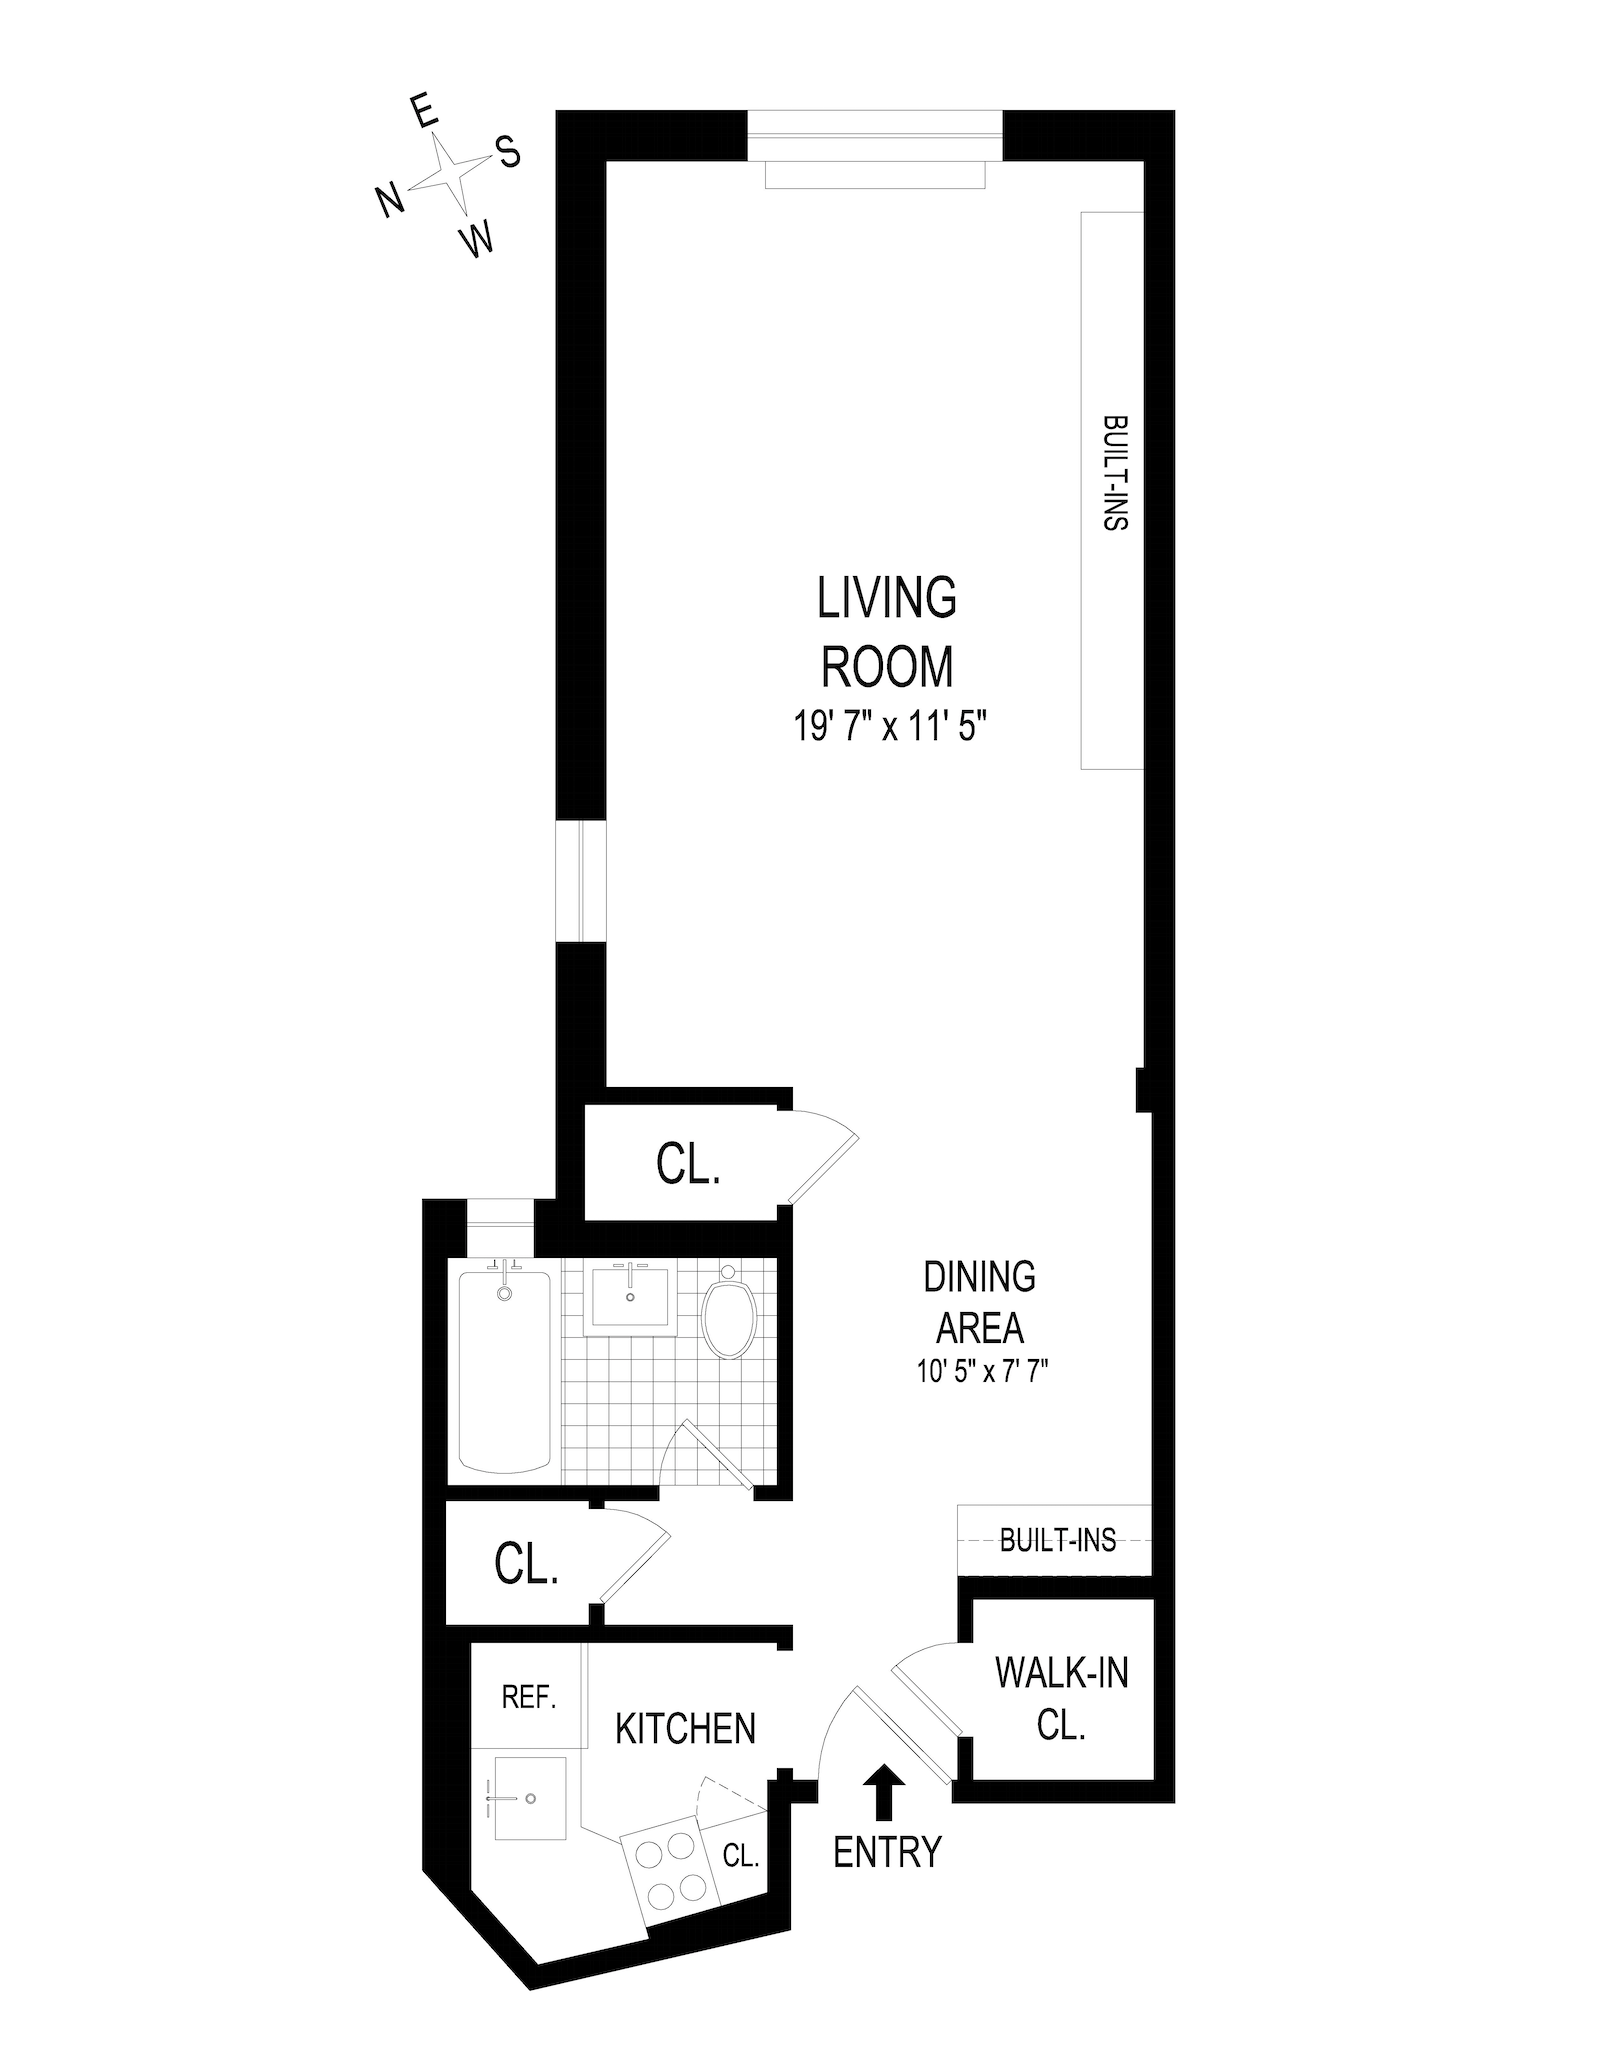 Floorplan for 100 Bank Street, 1G